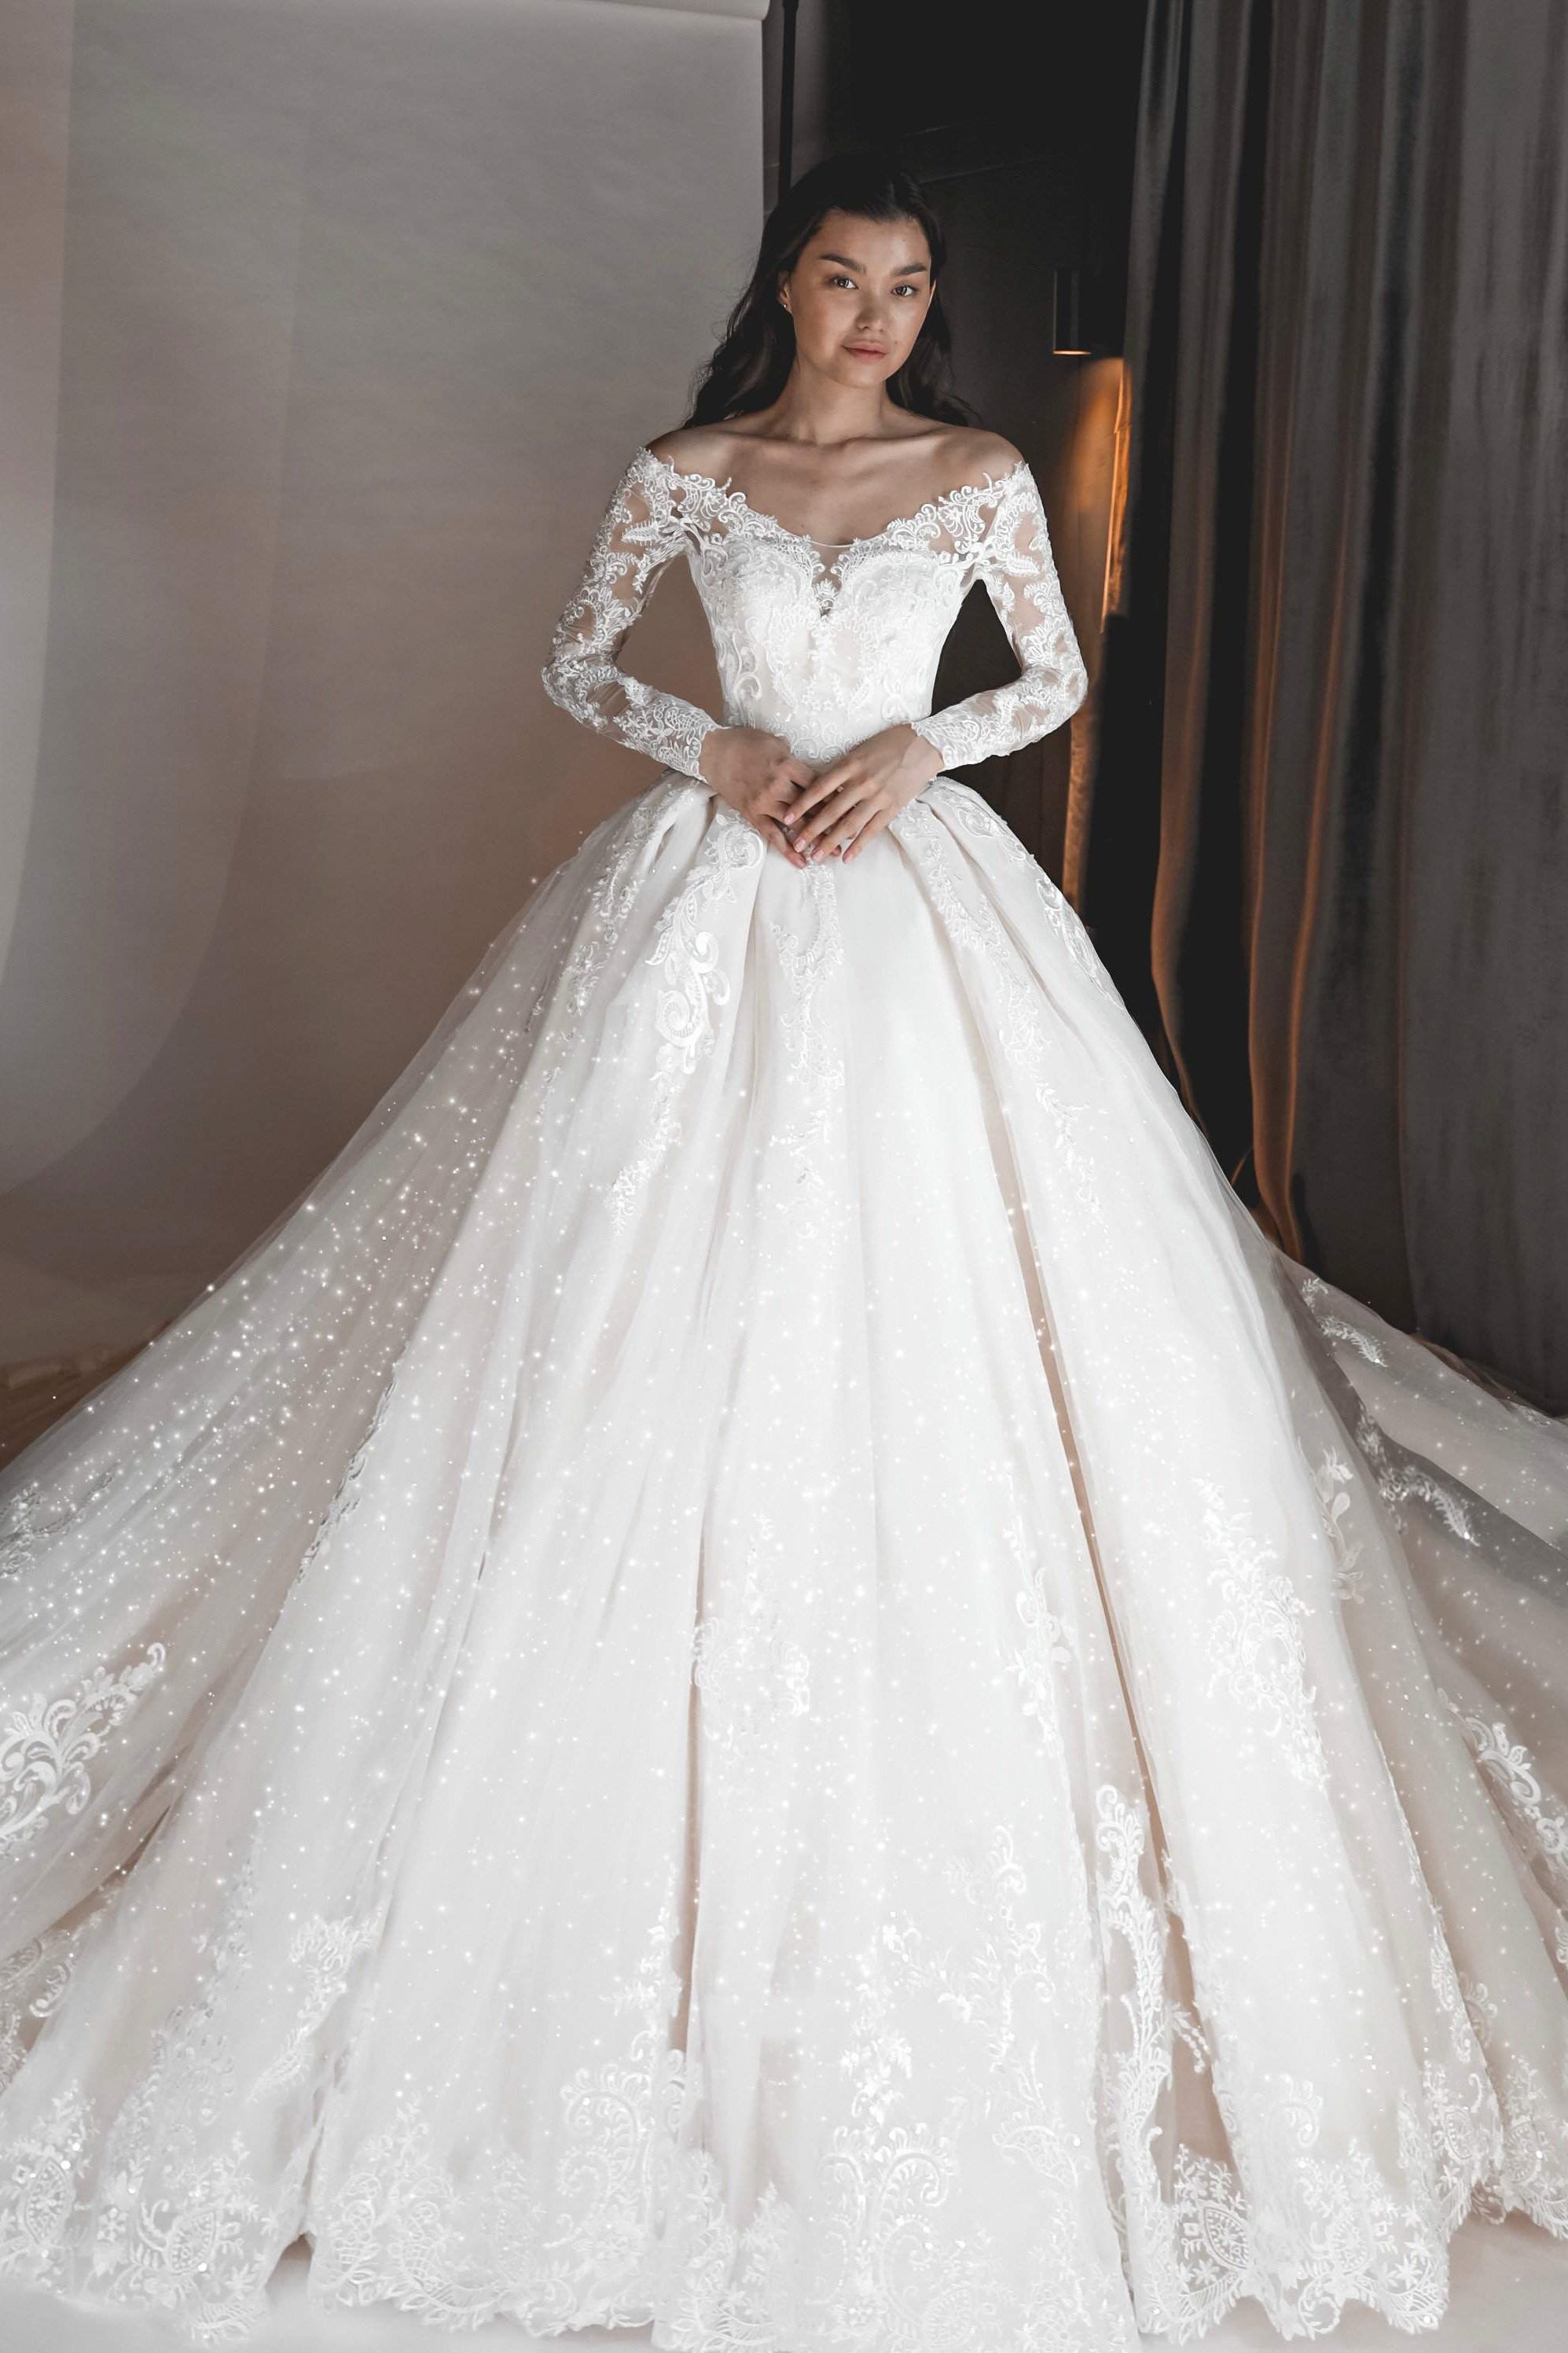 2 in 1 Lace Wedding Dress OB7962 with Detachable Skirt - Olivia Bottega